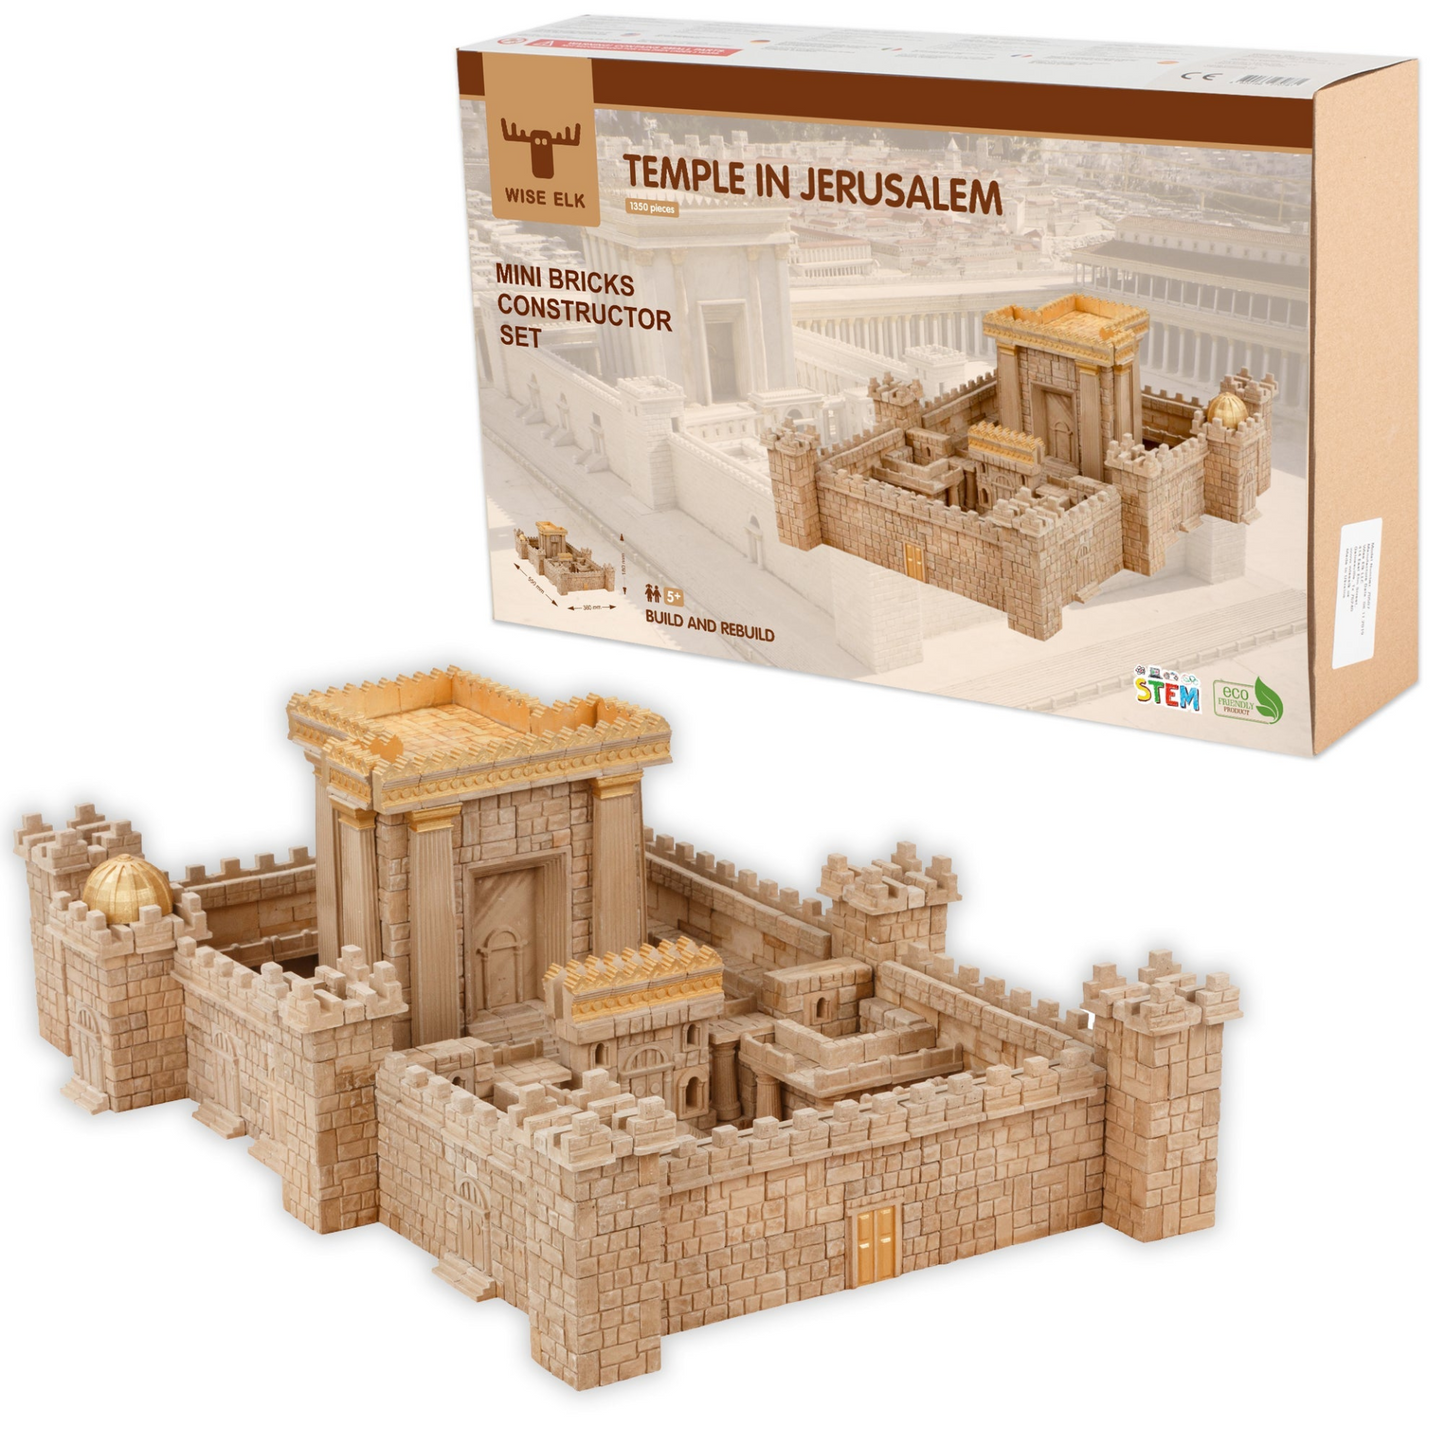 Mini Bricks Construction Set Temple in Jerusalem